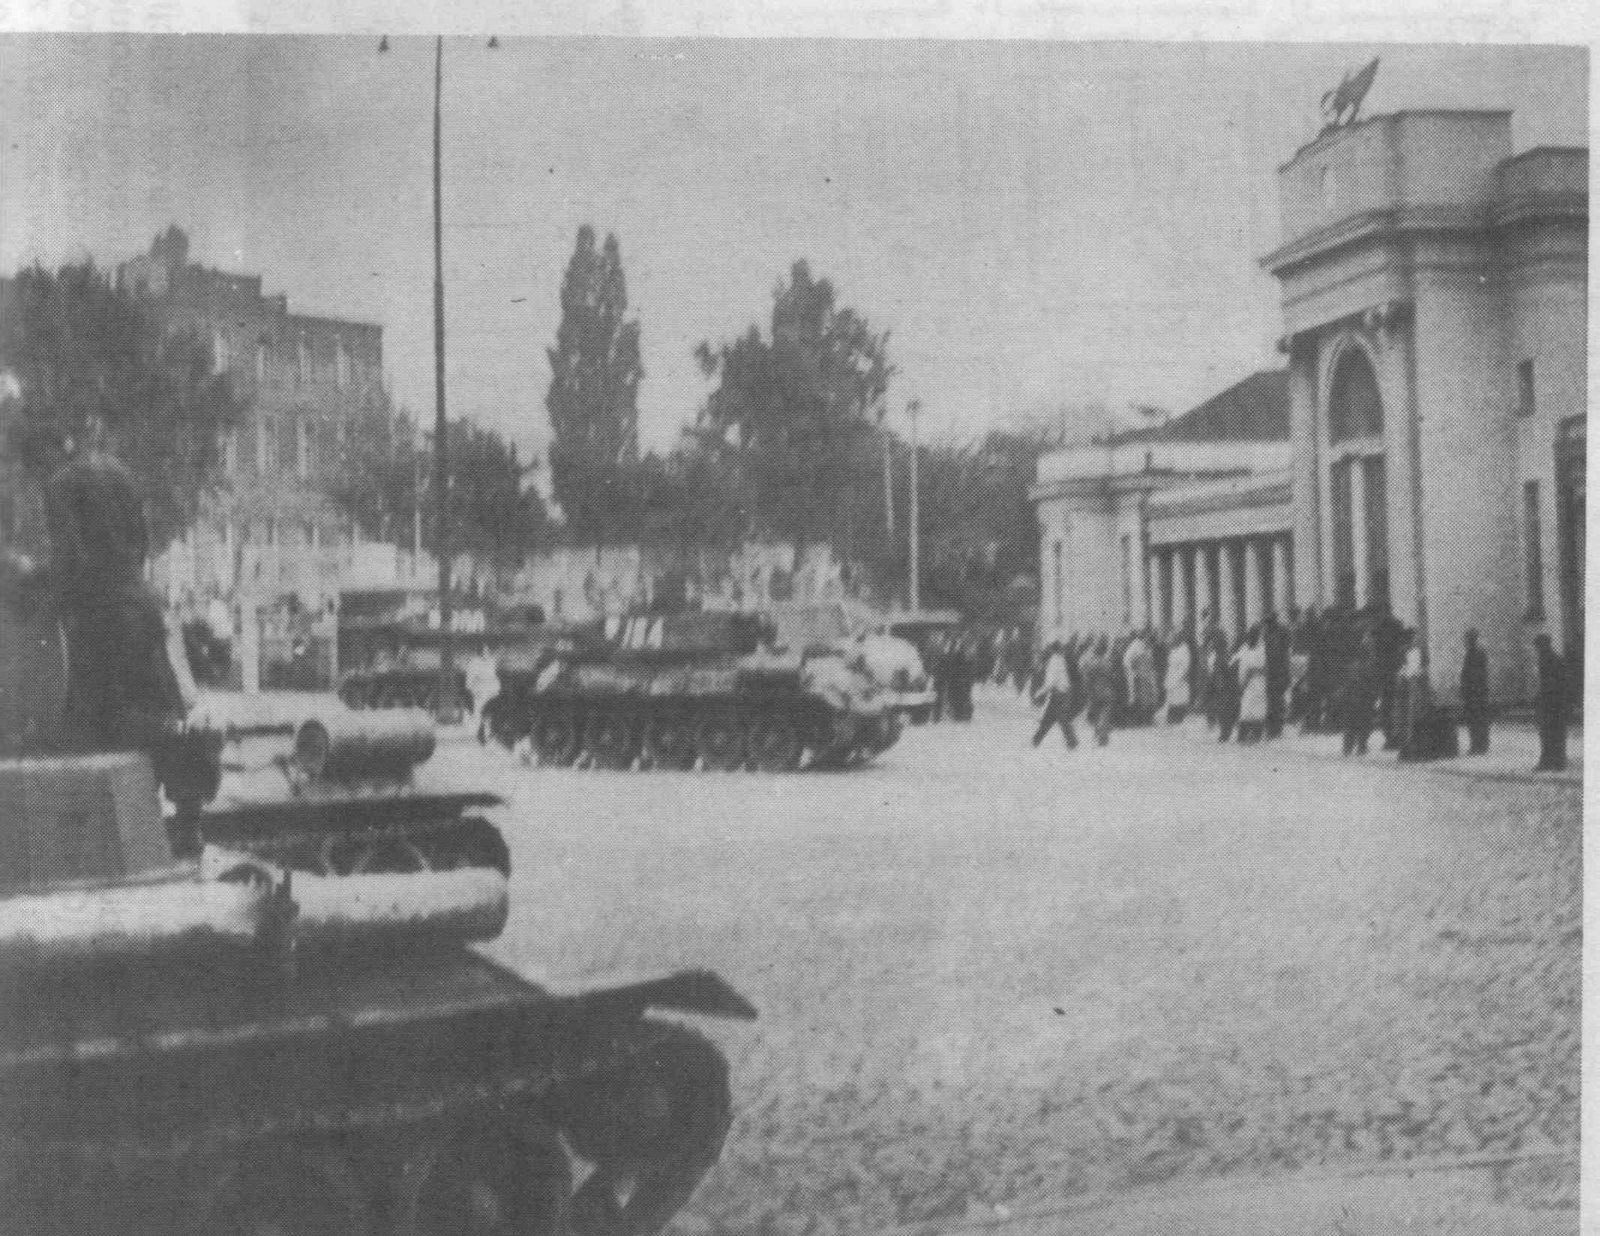 [Poznań1956-Tankok,tankok,tankok3.jpg]